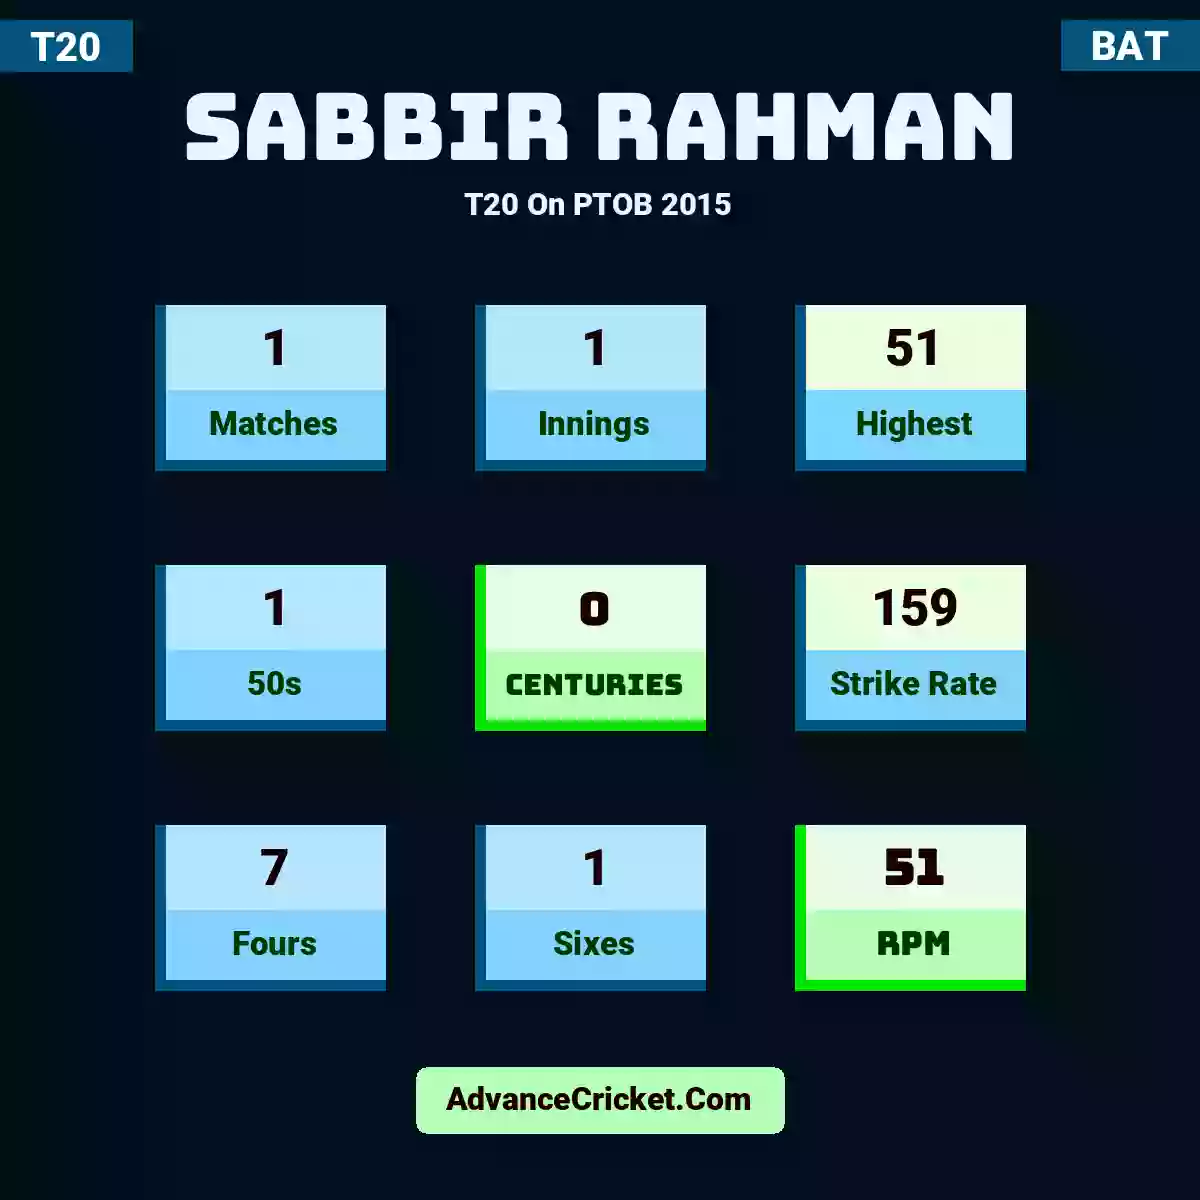 Sabbir Rahman T20  On PTOB 2015, Sabbir Rahman played 1 matches, scored 51 runs as highest, 1 half-centuries, and 0 centuries, with a strike rate of 159. S.Rahman hit 7 fours and 1 sixes, with an RPM of 51.